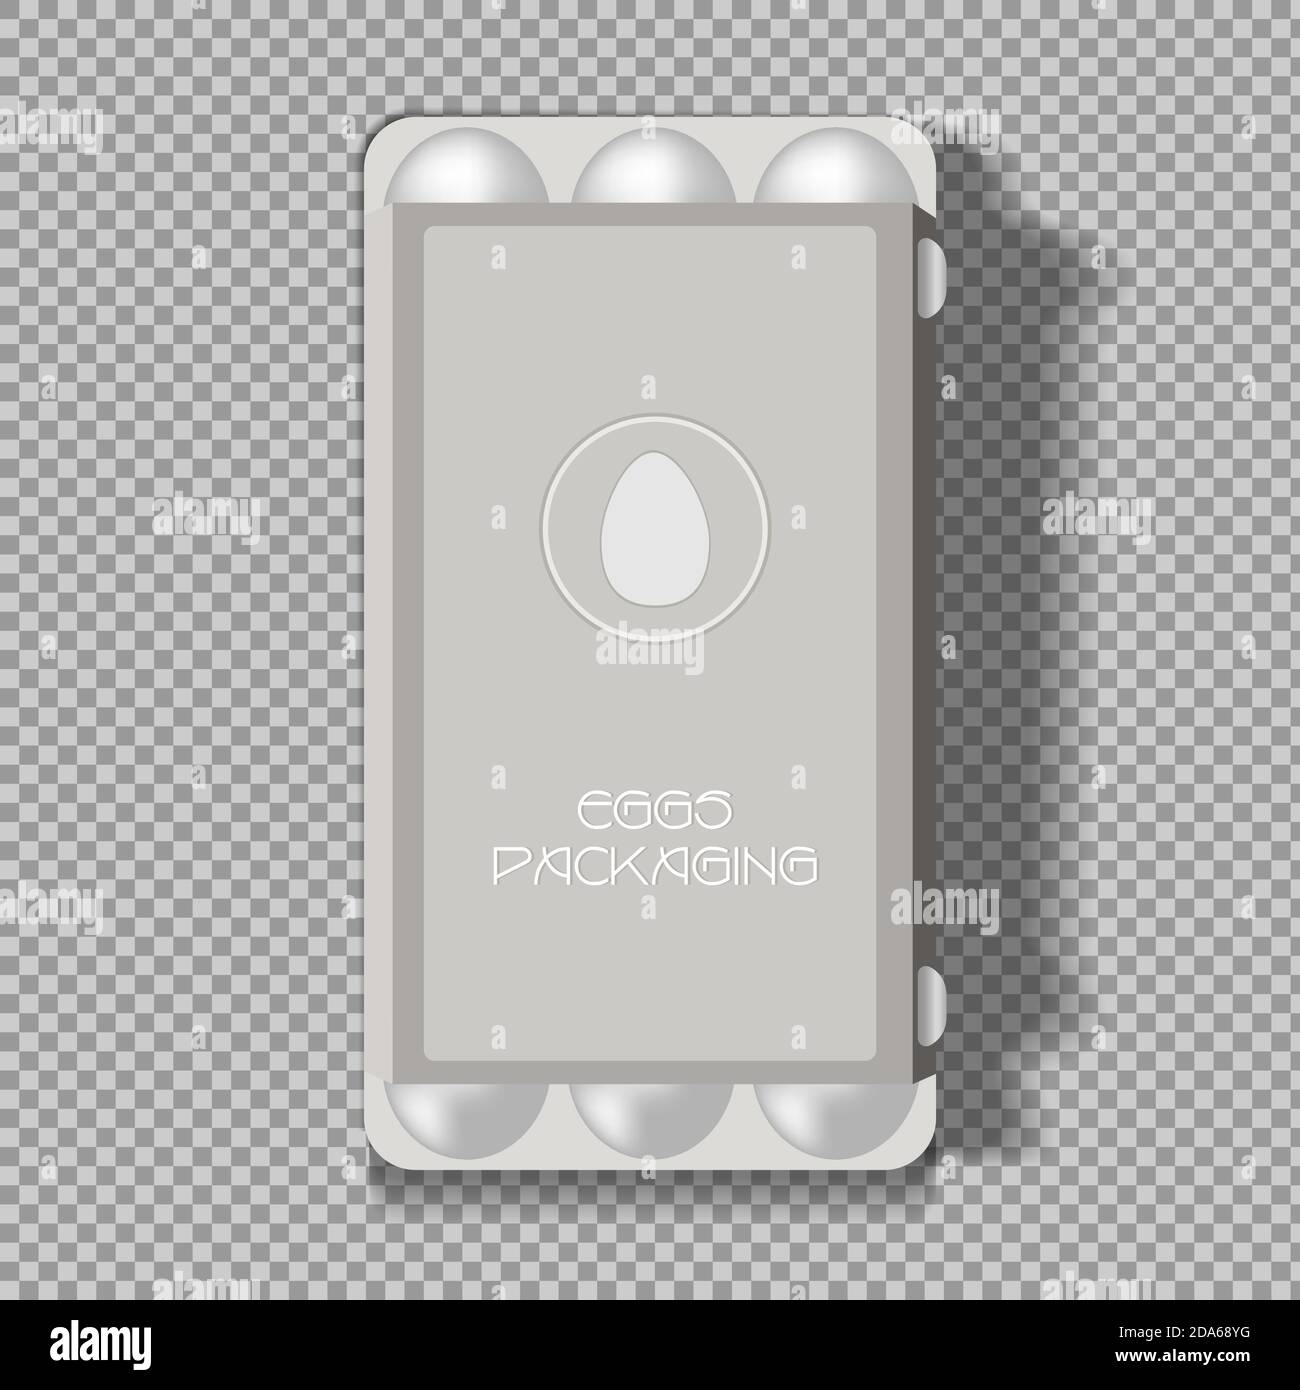 Egg tray on a transparent background, mockap. Isolated vector object on a transparent background. Stock Vector